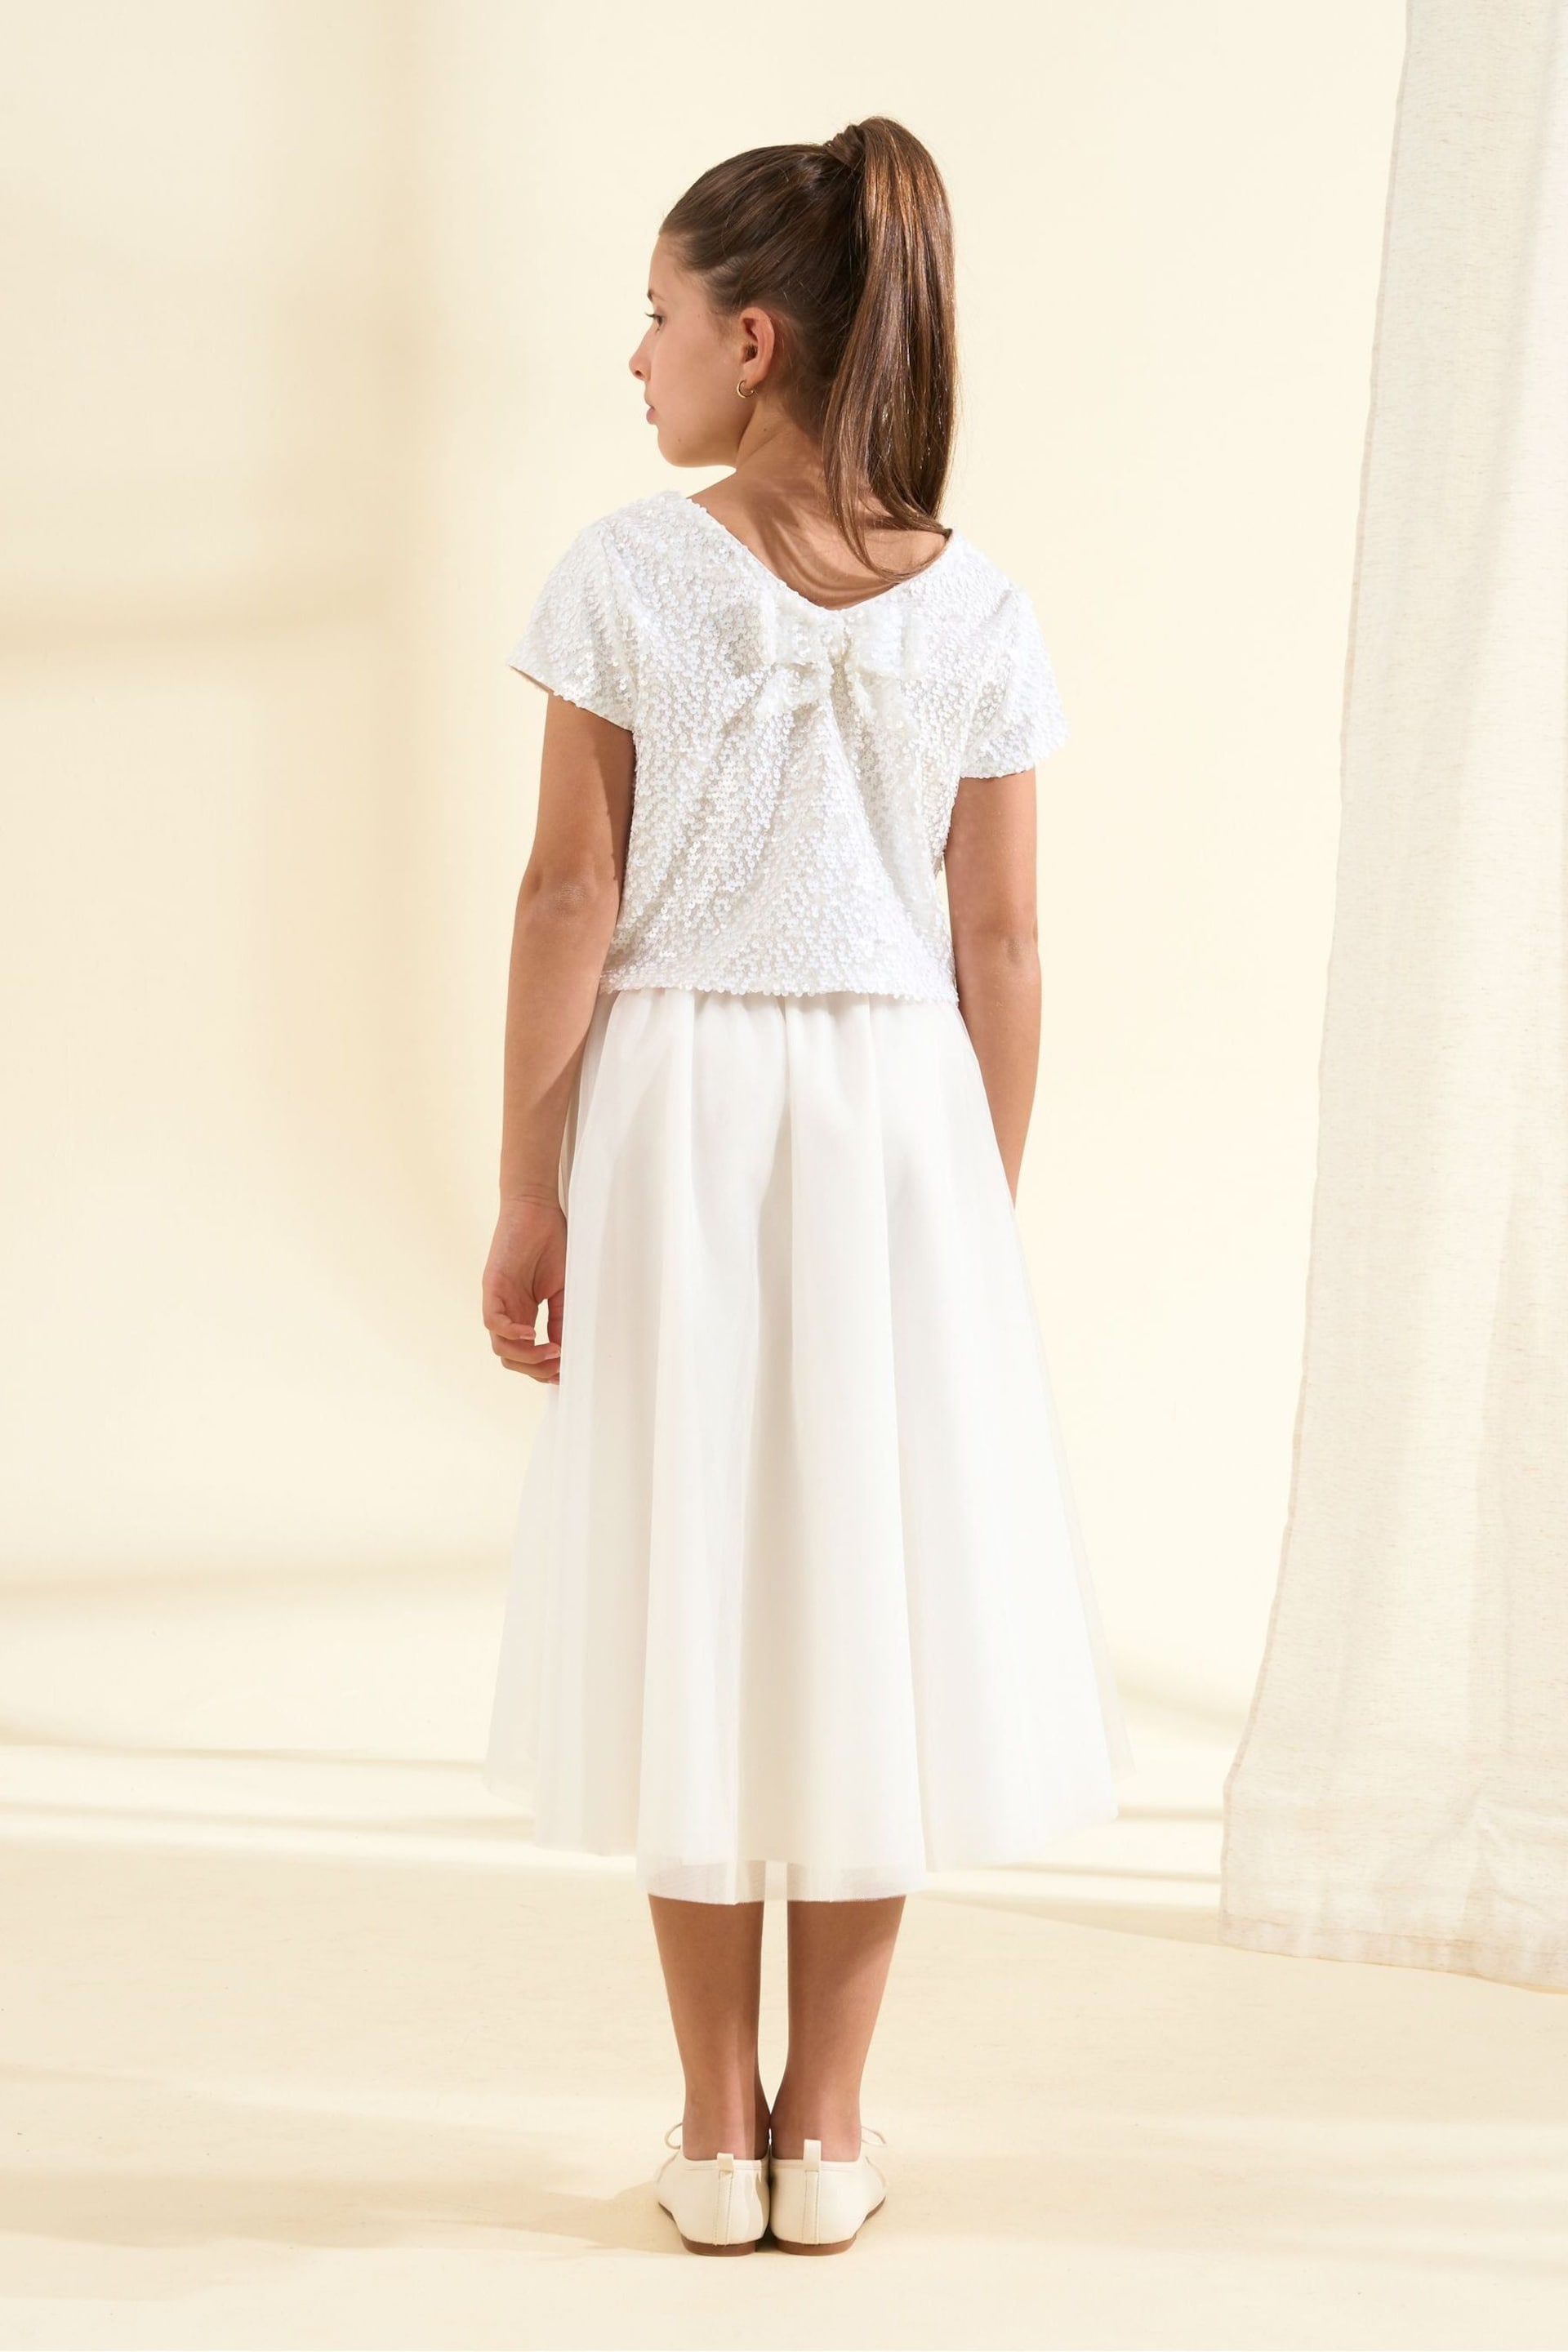 Angel & Rocket White Sequin Leonie Top & Skirt Set - Image 5 of 5